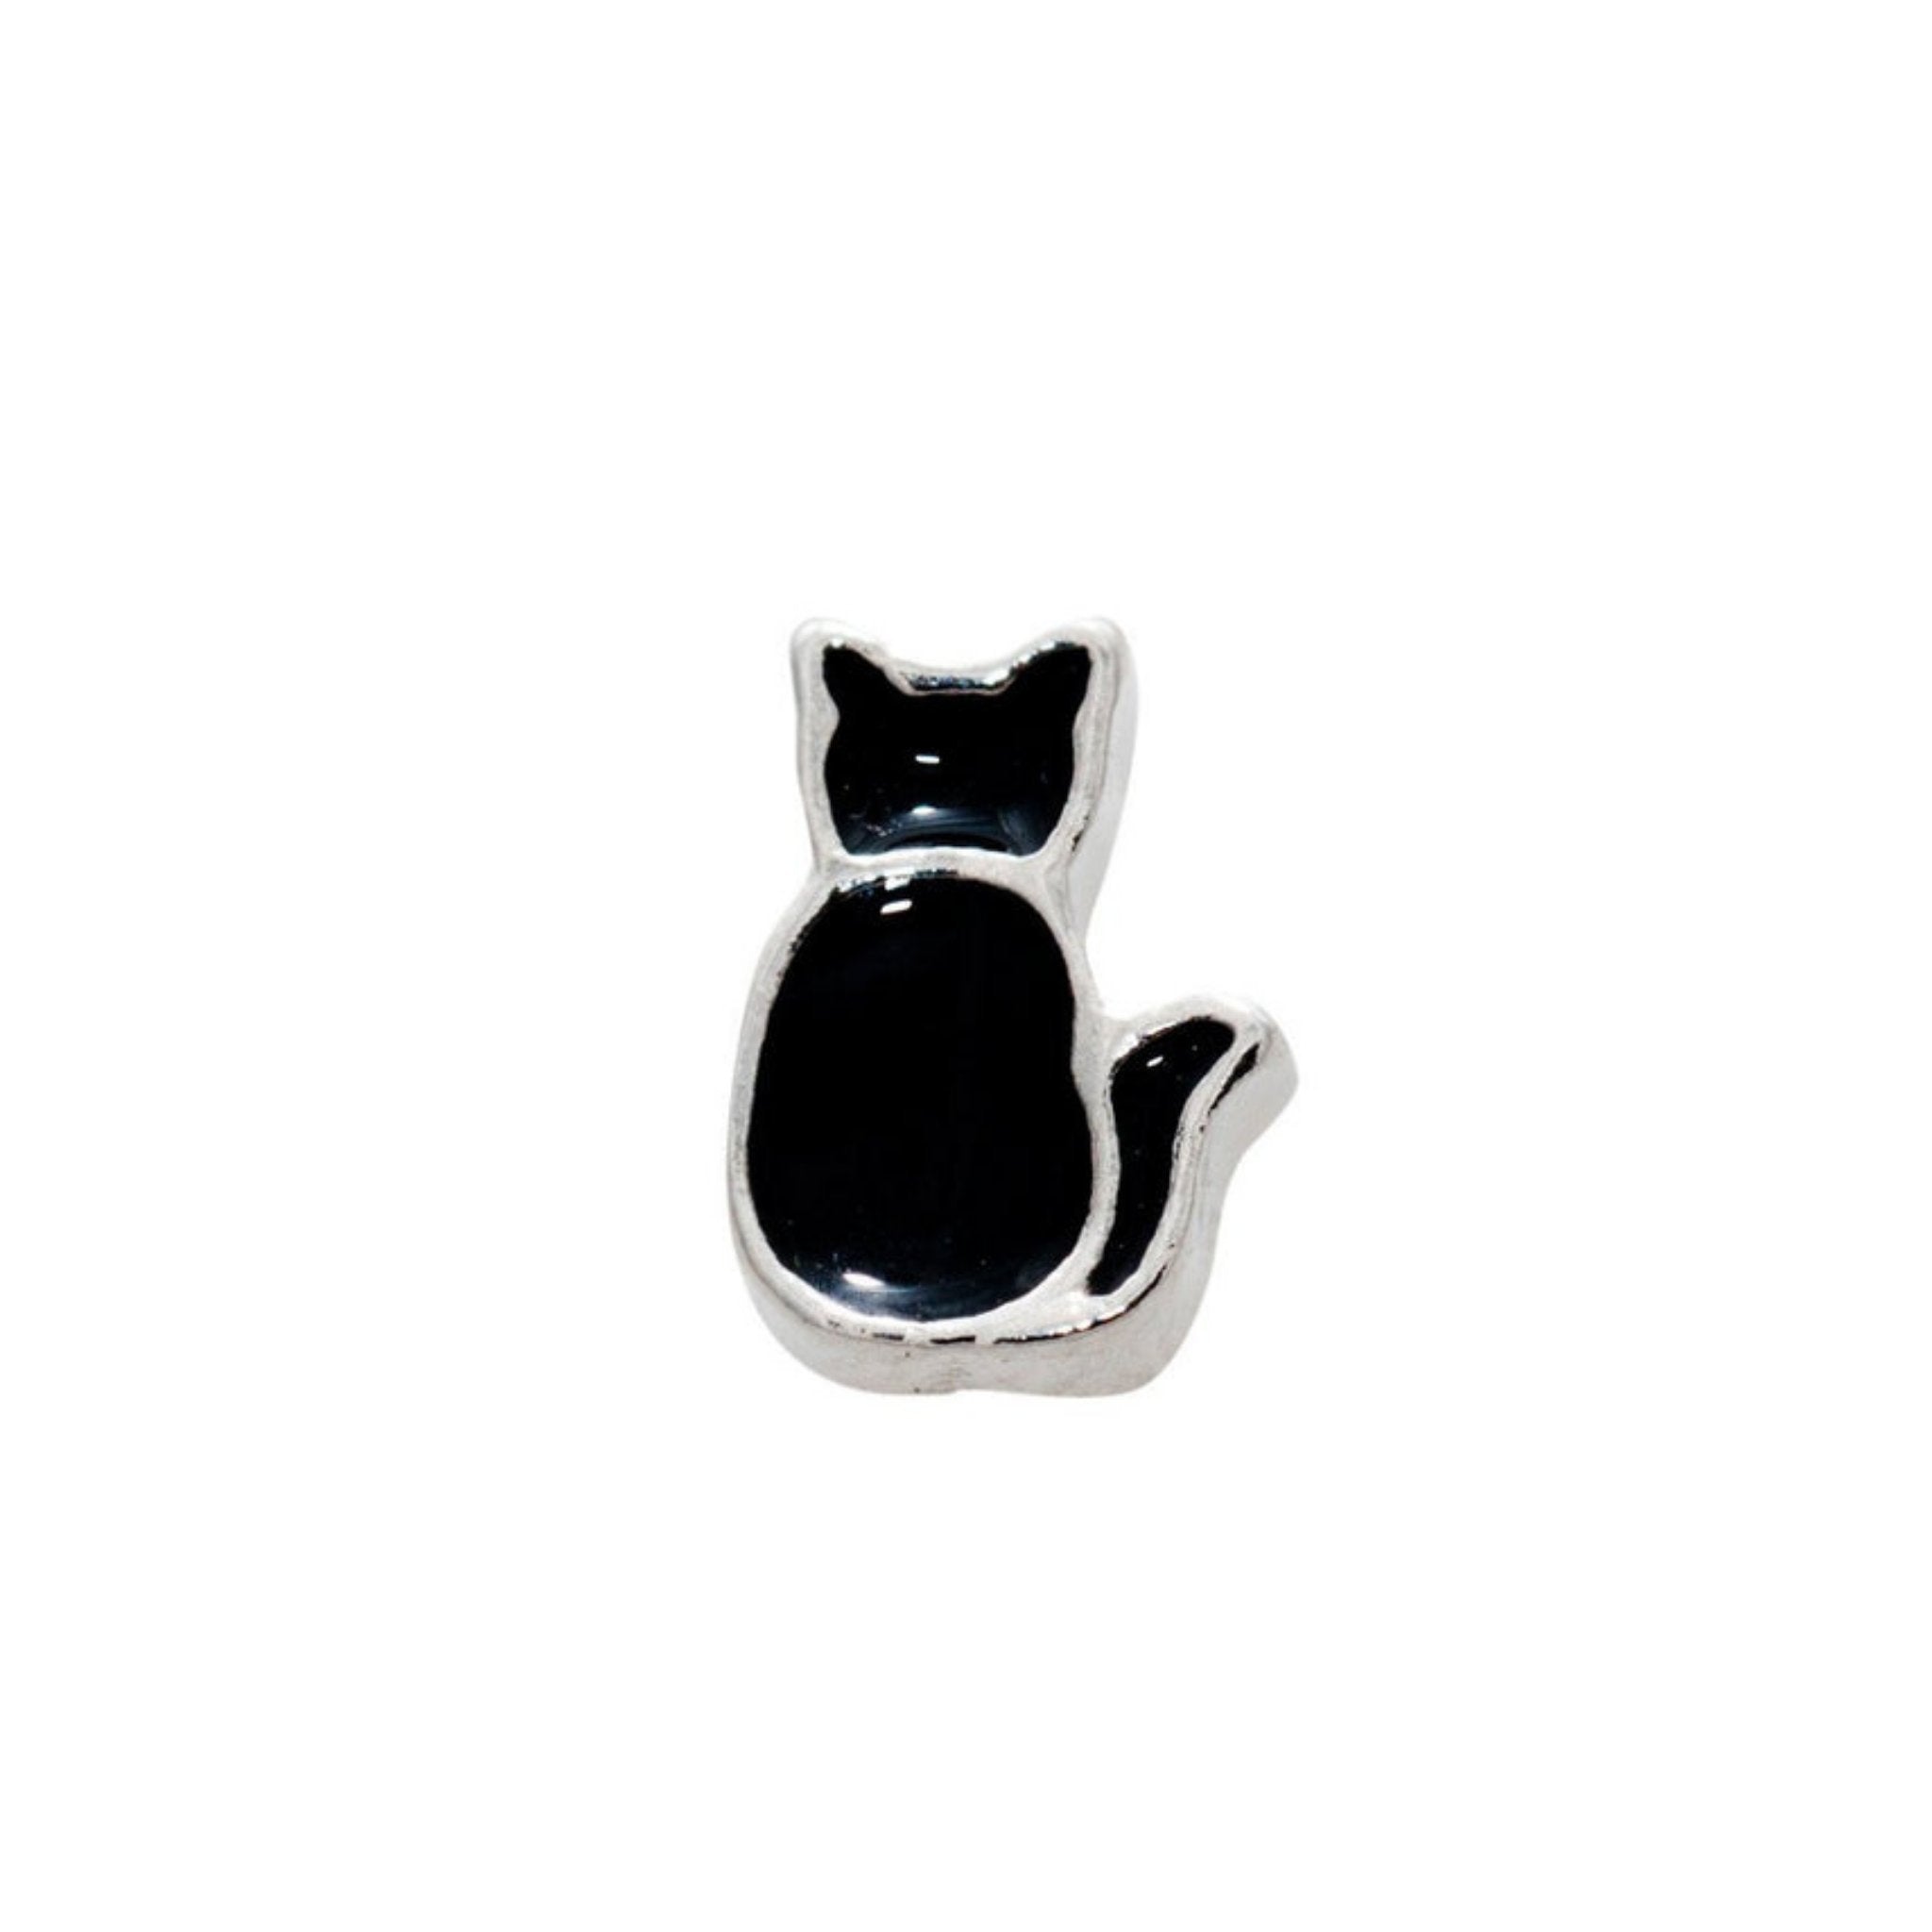 Memory Locket Charm - Black cat